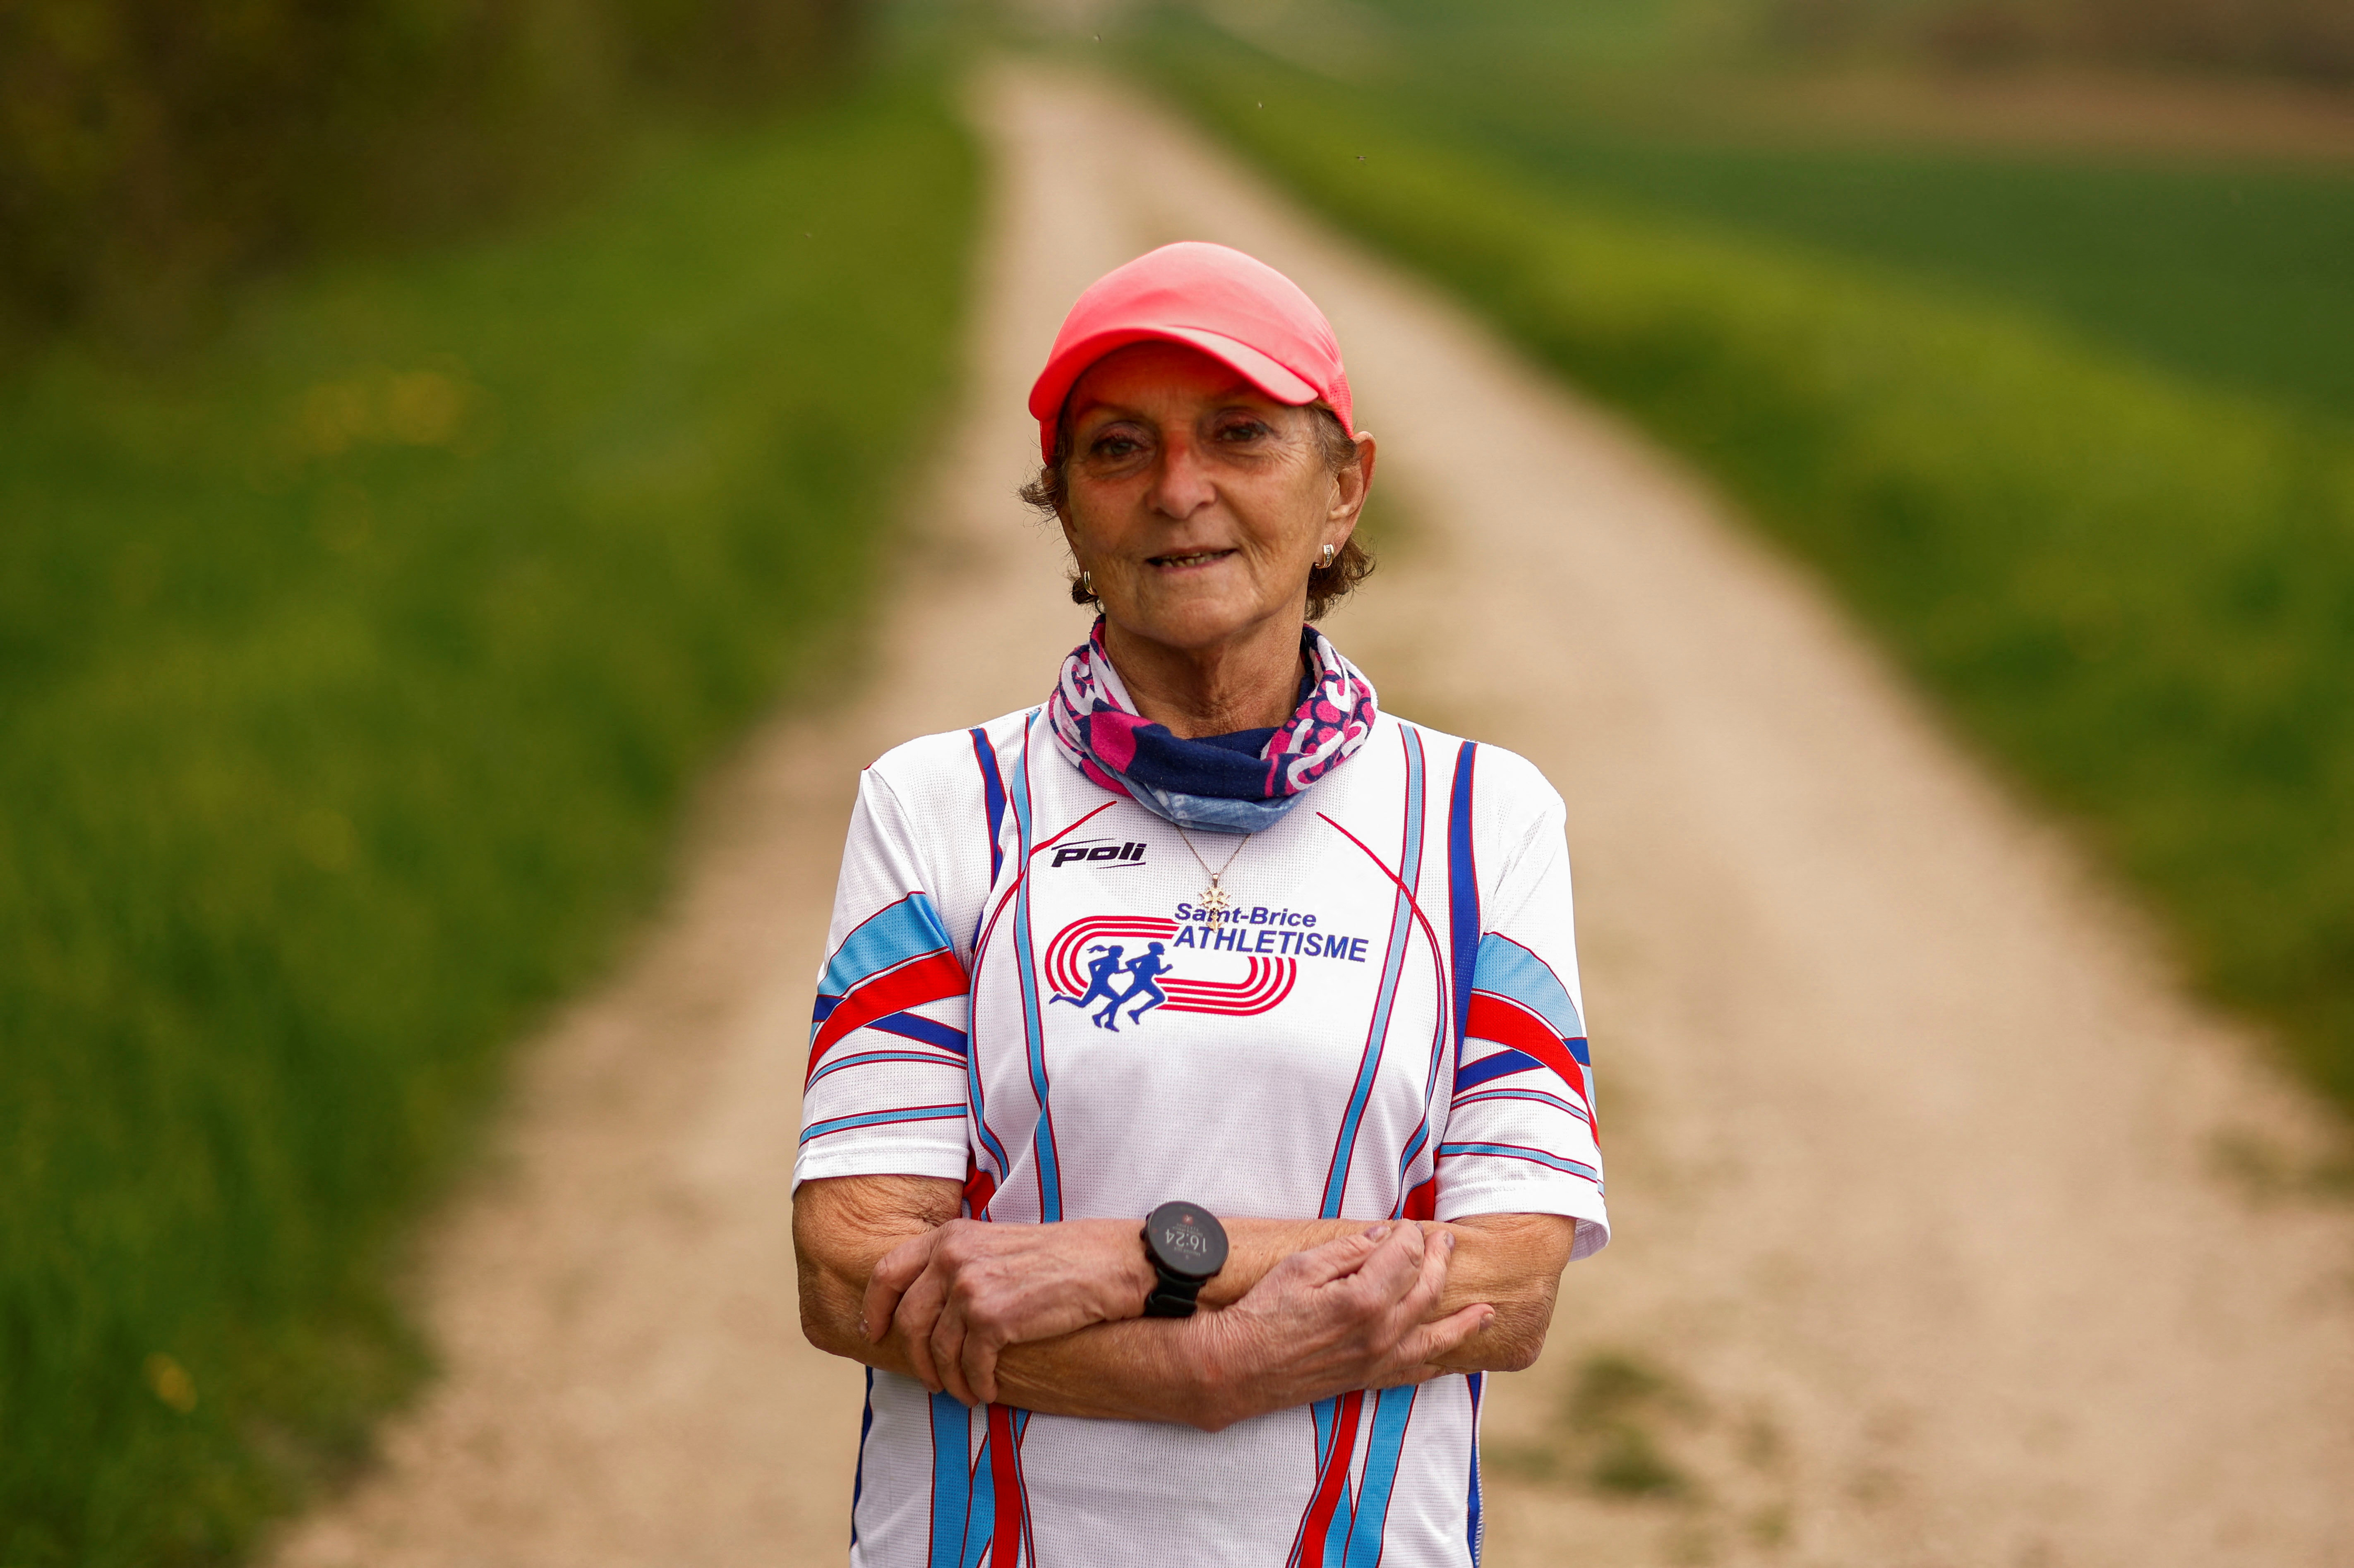 French grandma marathon runner dreams to run the Olympic Marathon For All in 2024 in Paris